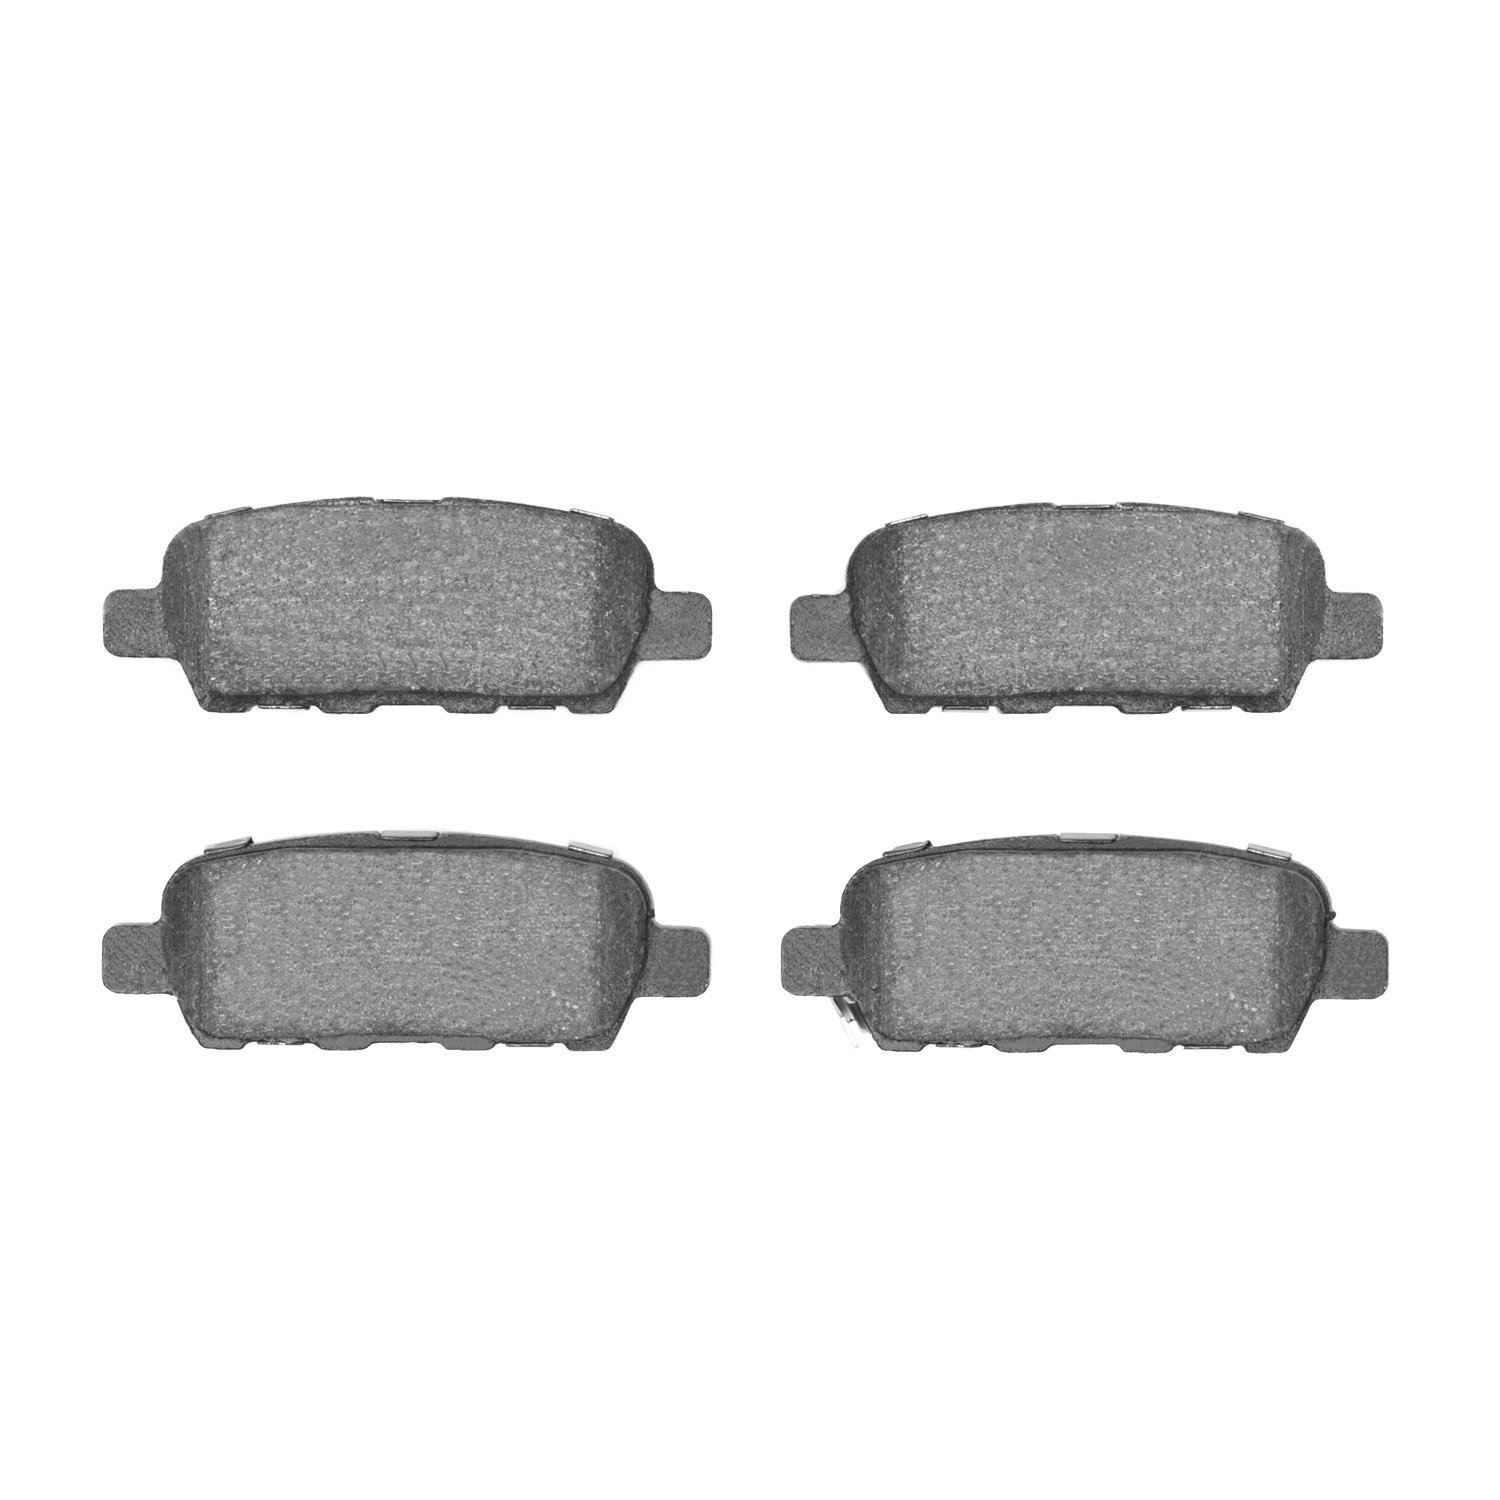 1600-0905-00 5000 Euro Ceramic Brake Pads, Fits Select Multiple Makes/Models, Position: Rear